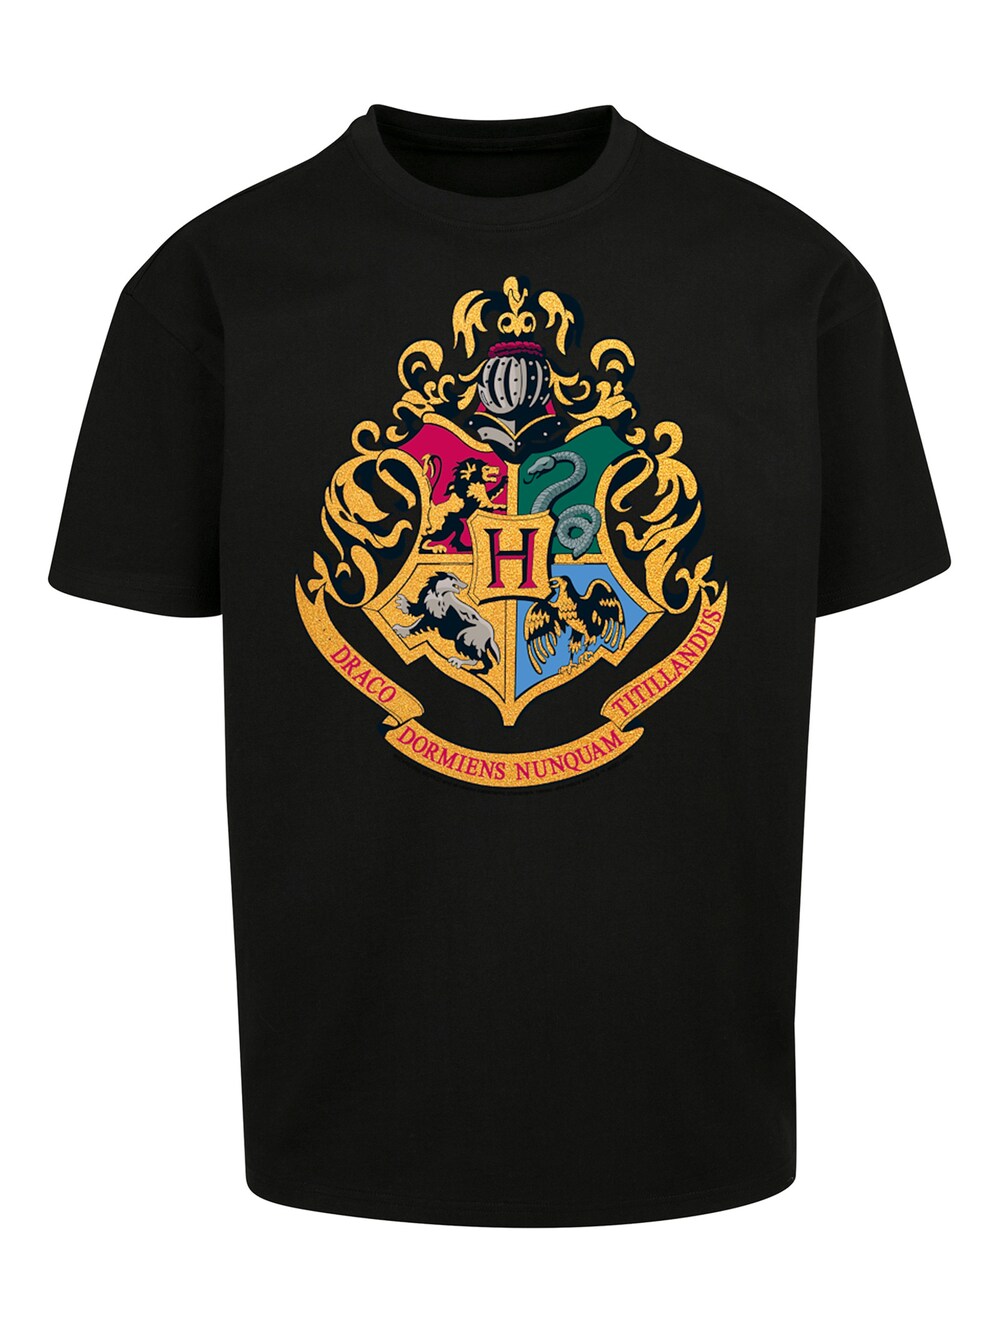 Футболка F4Nt4Stic Harry Potter Hogwarts Crest Gold, черный брелок harry potter hogwarts crest